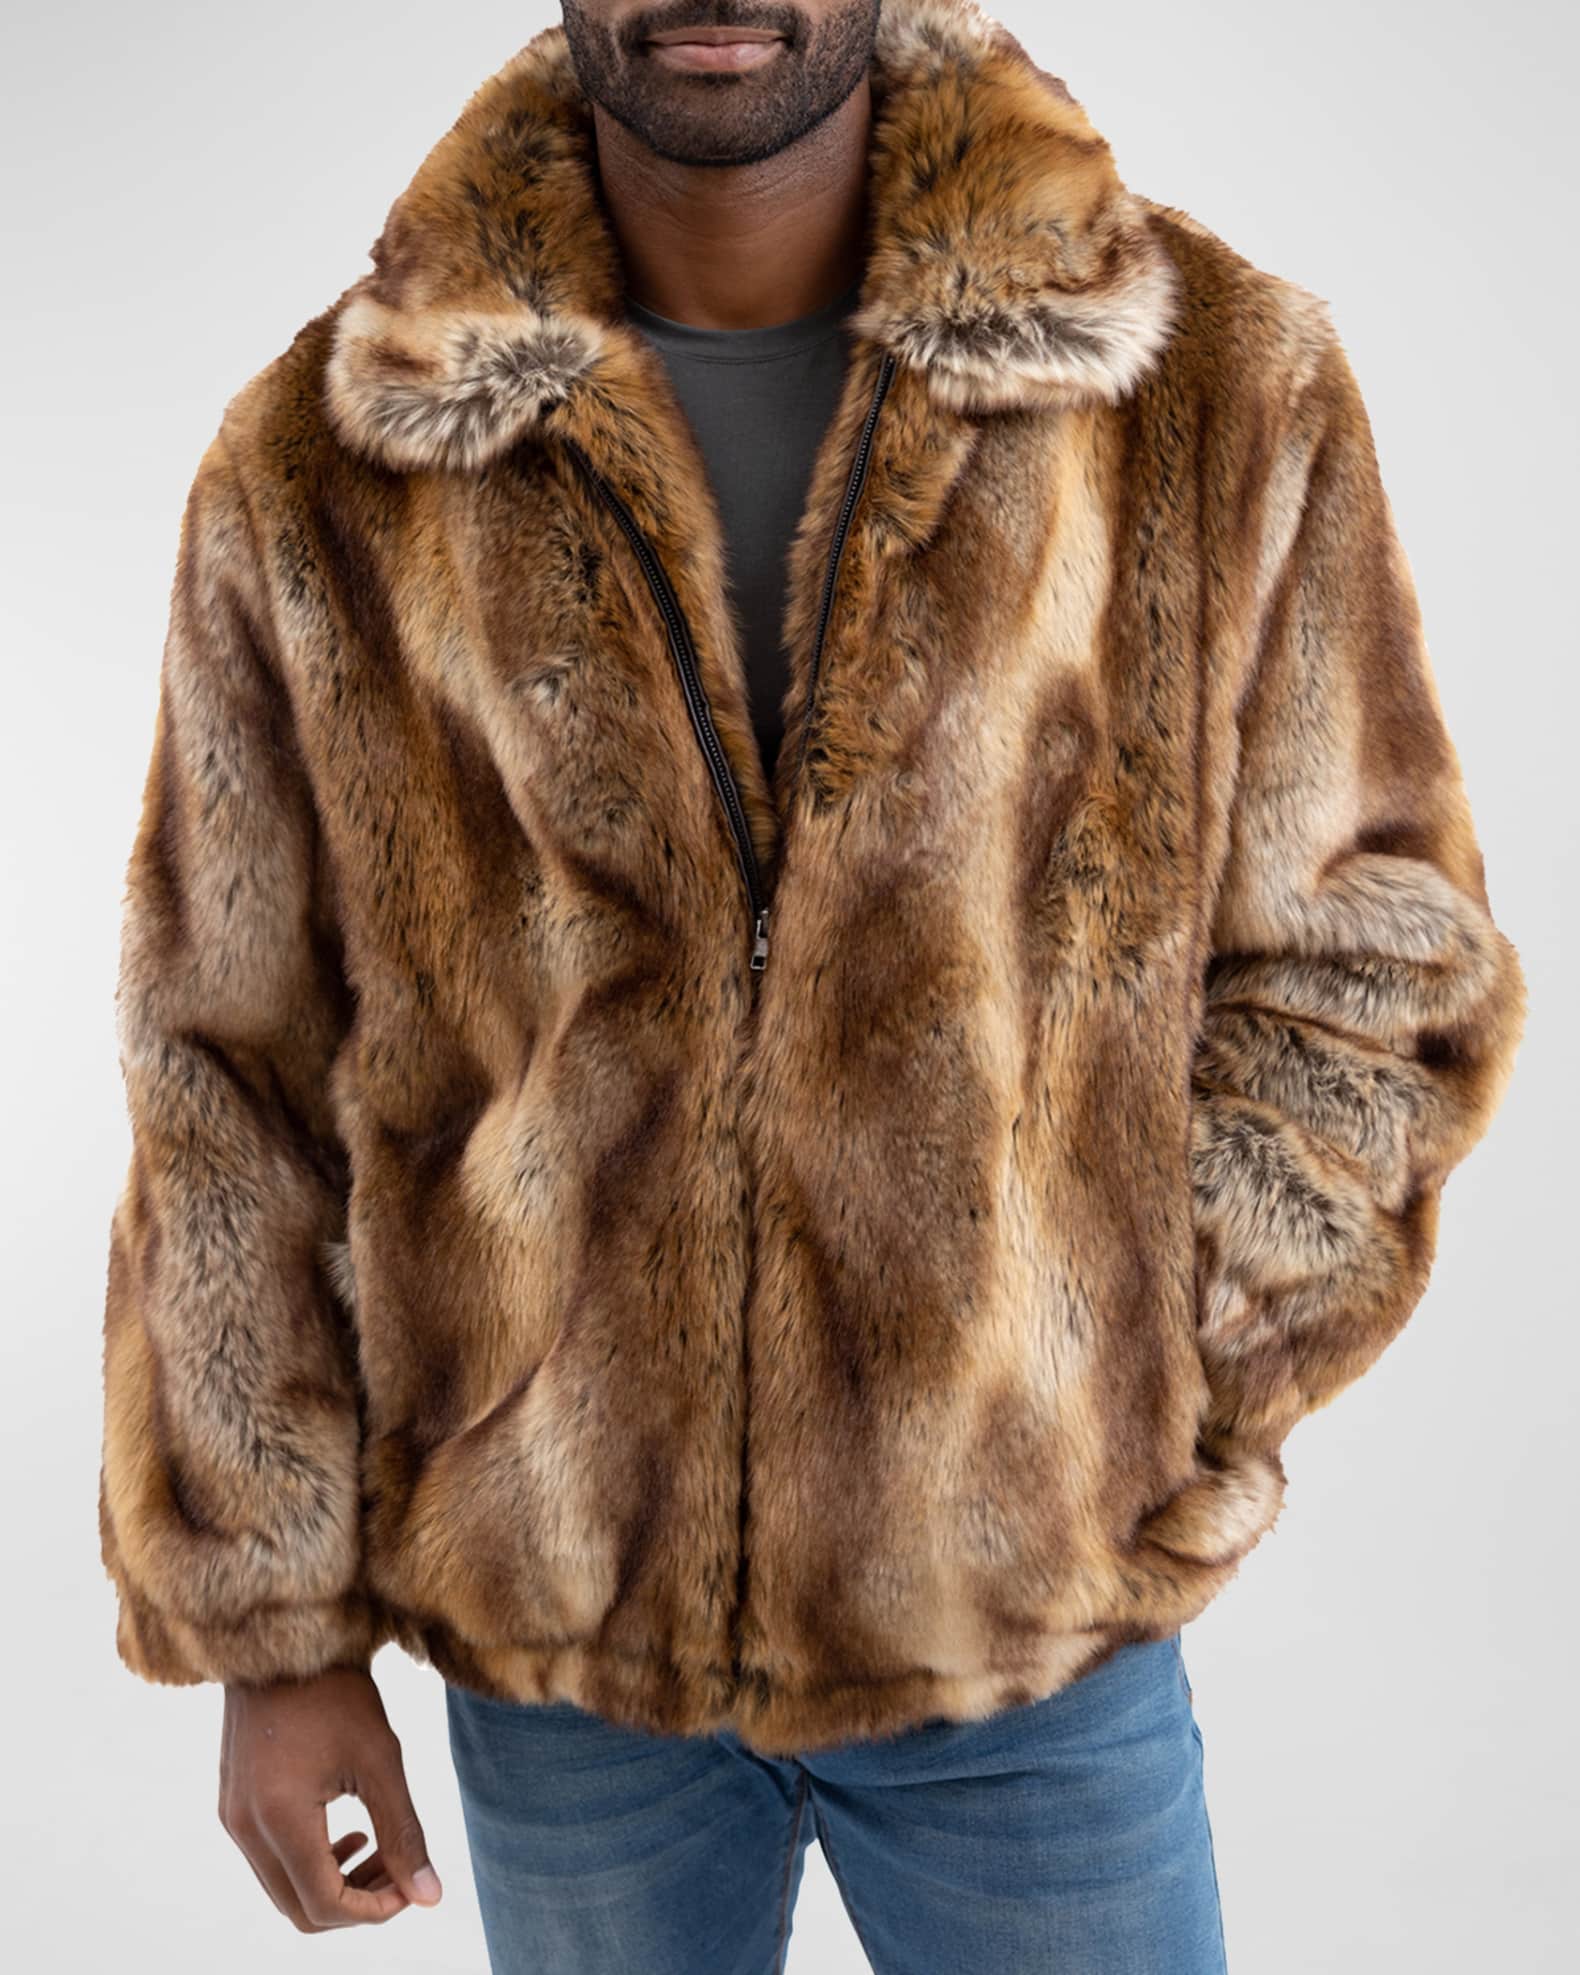 Fur clothing Outerwear Jacket Hood, brown supreme louis vuitton hoodie,  clothing, fur, fur Clothing png